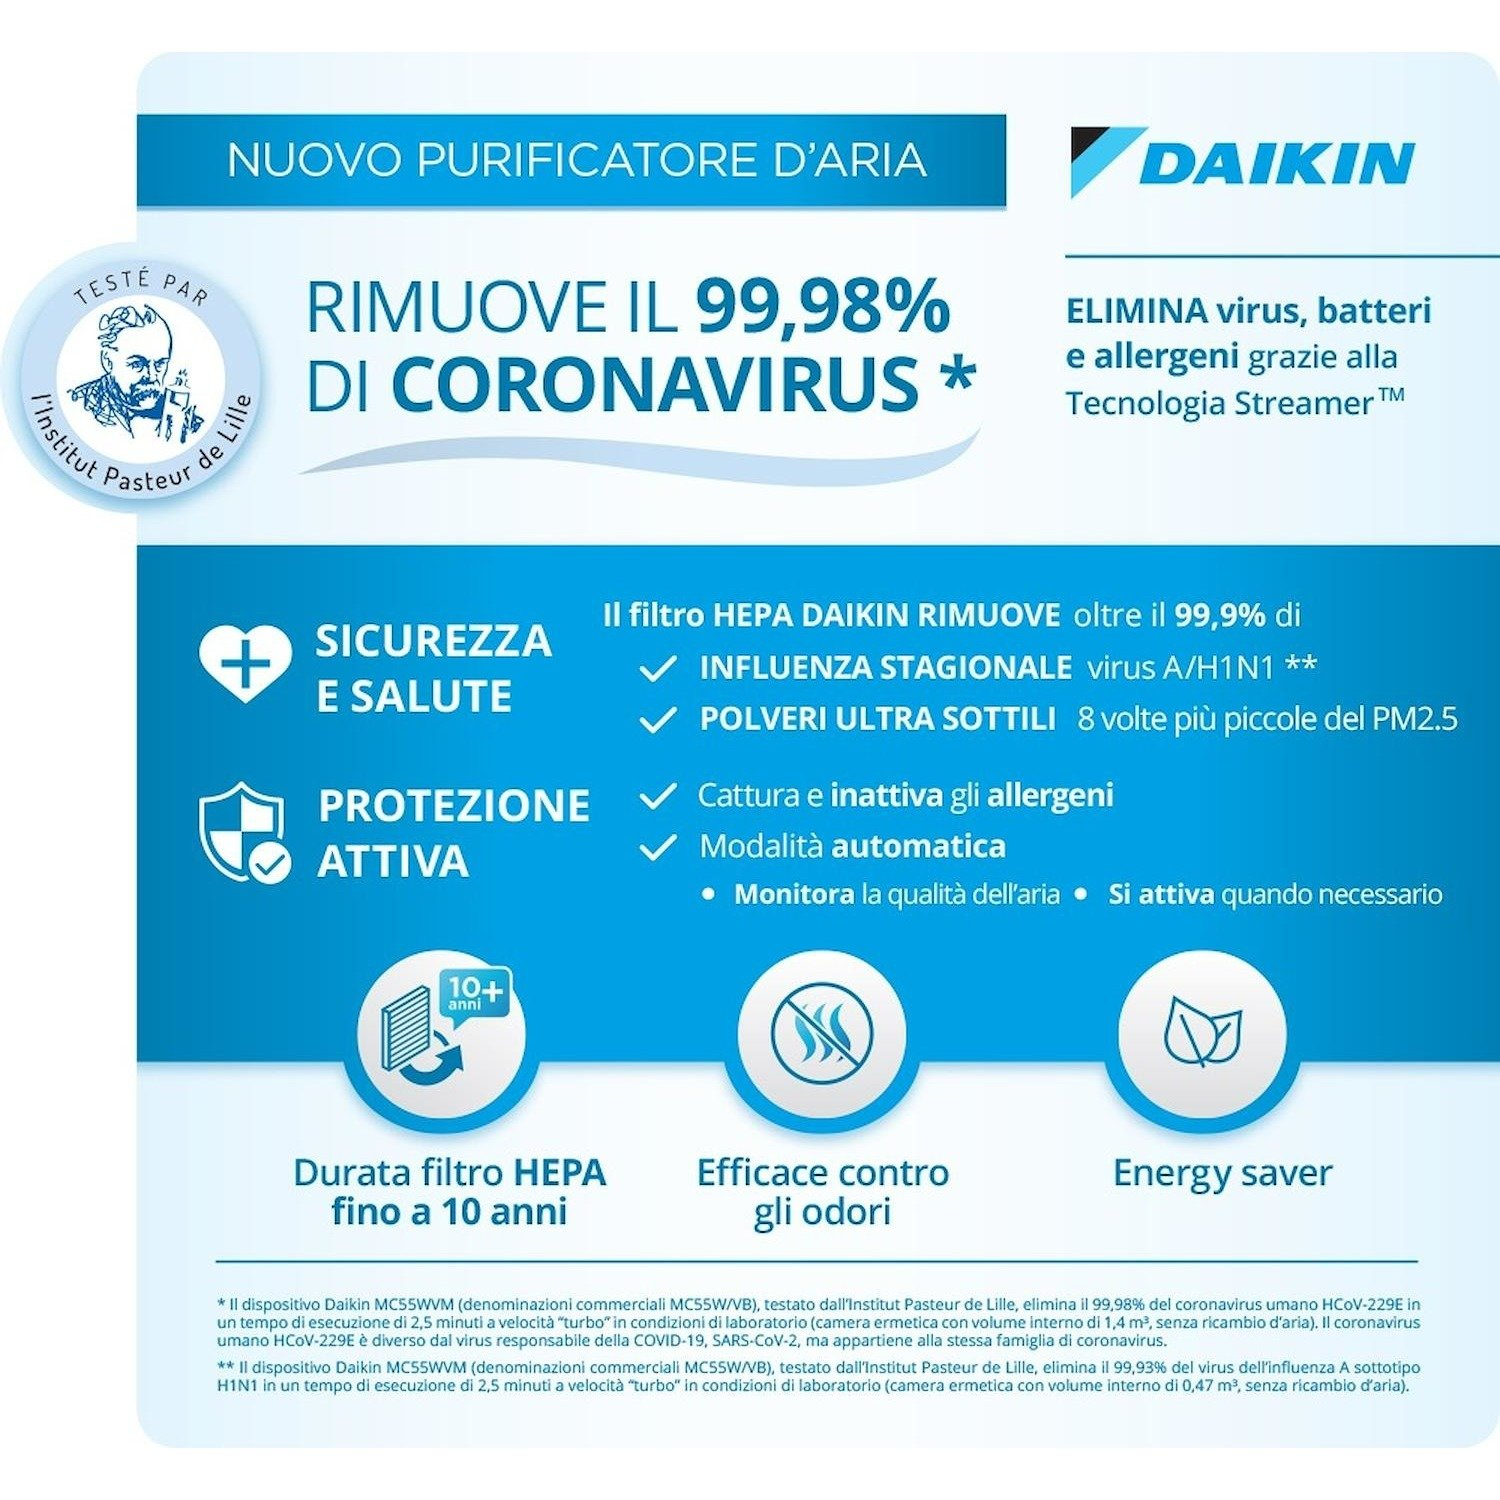 Purificatore d'aria Daikin elimina il 99,98% di Coronavirus